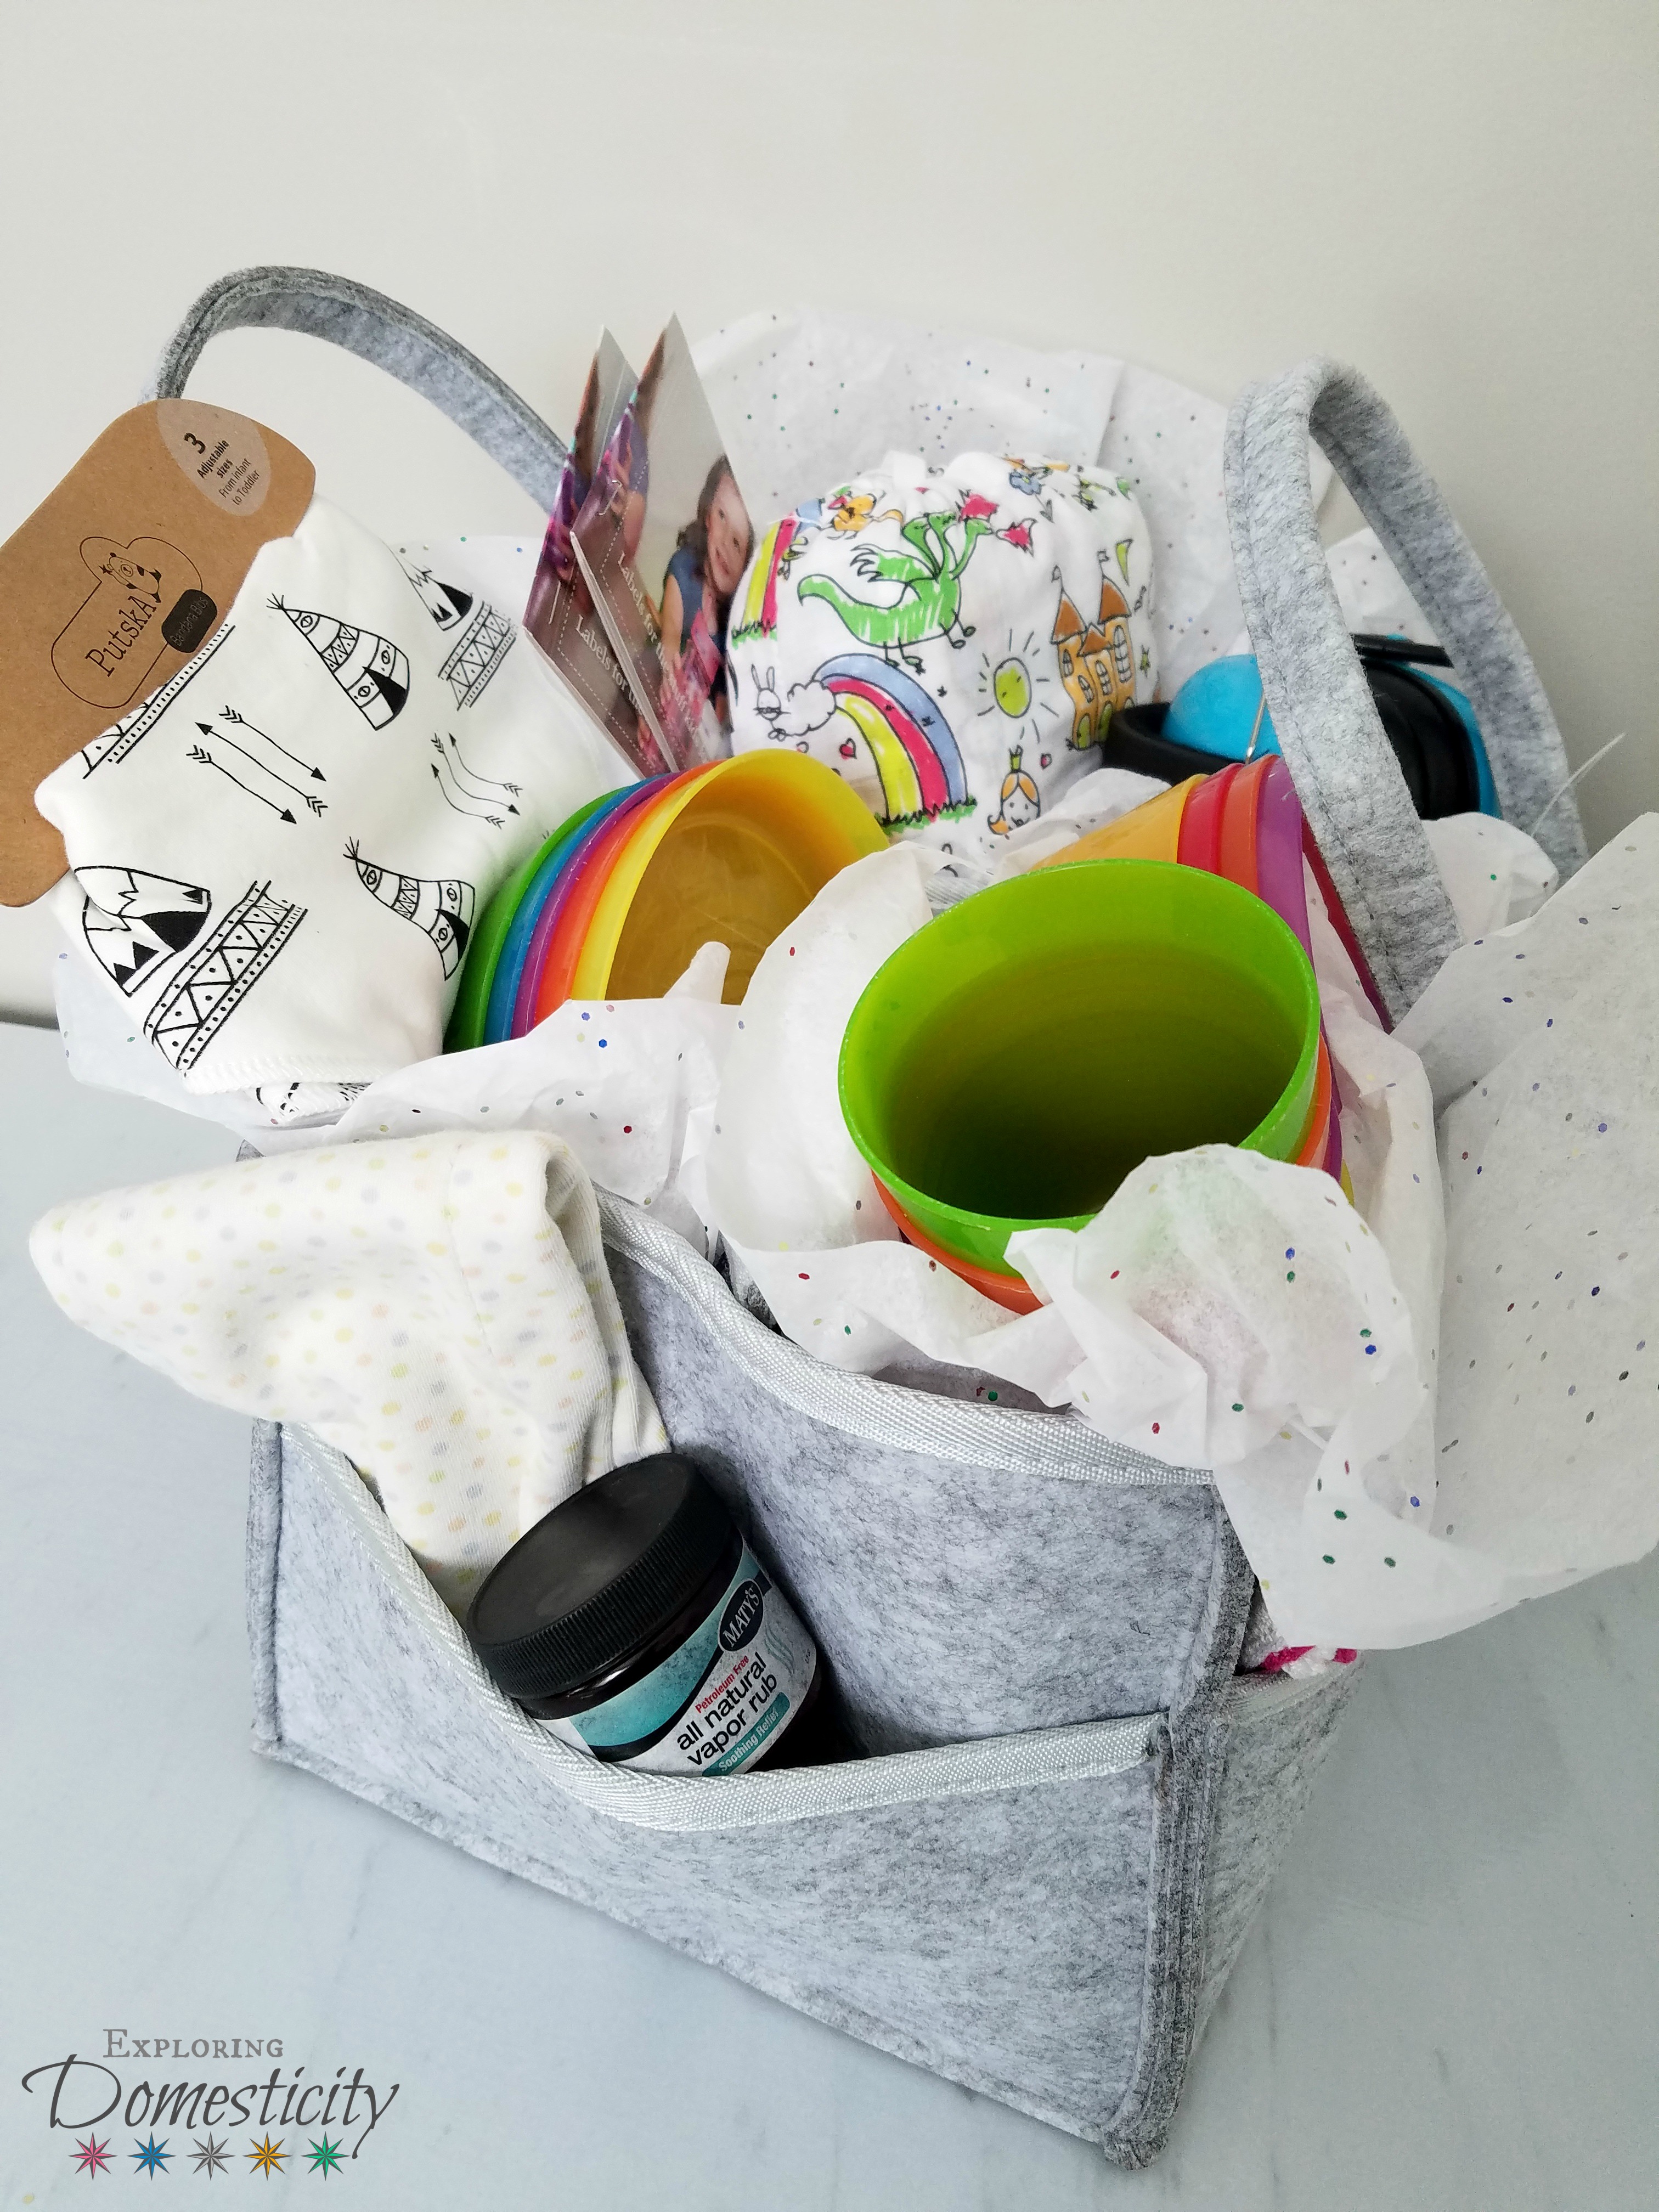 https://exploringdomesticity.com/wp-content/uploads/2018/04/Baby-Gift-Ideas-Matys-natural-vabor-rub-Gerber-burp-cloths-bandana-bib-IKEA-kids-dishes.jpg